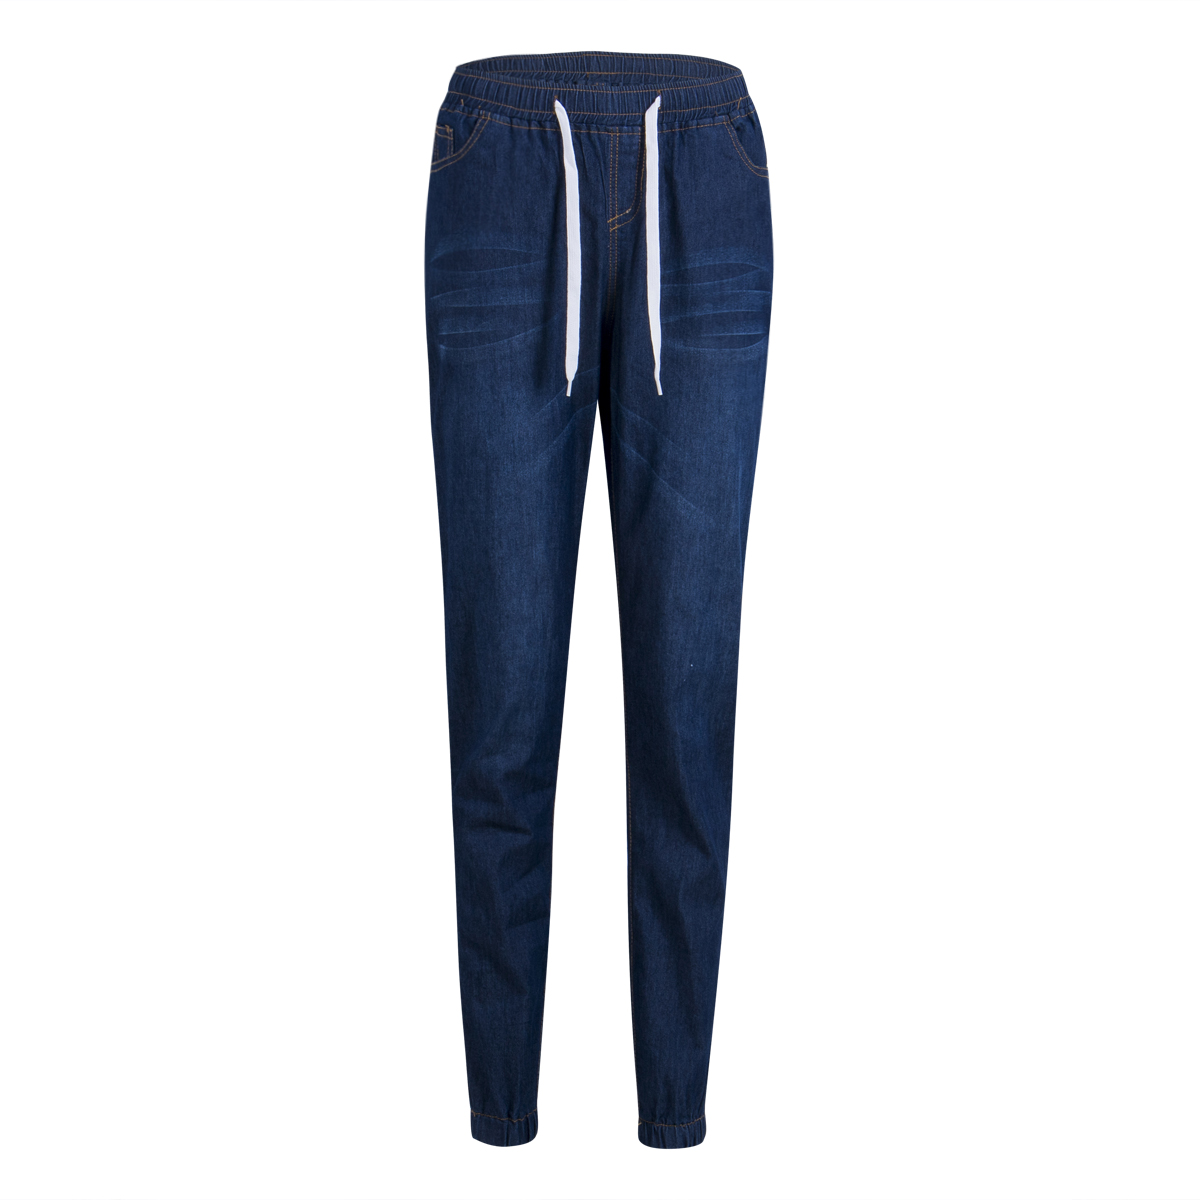 Puloru New Fashion Women Denim Skinny Cut Pencil Pants High Waist Stretch Jeans Trousers Slim drawstring bloomers jeans - image 2 of 5